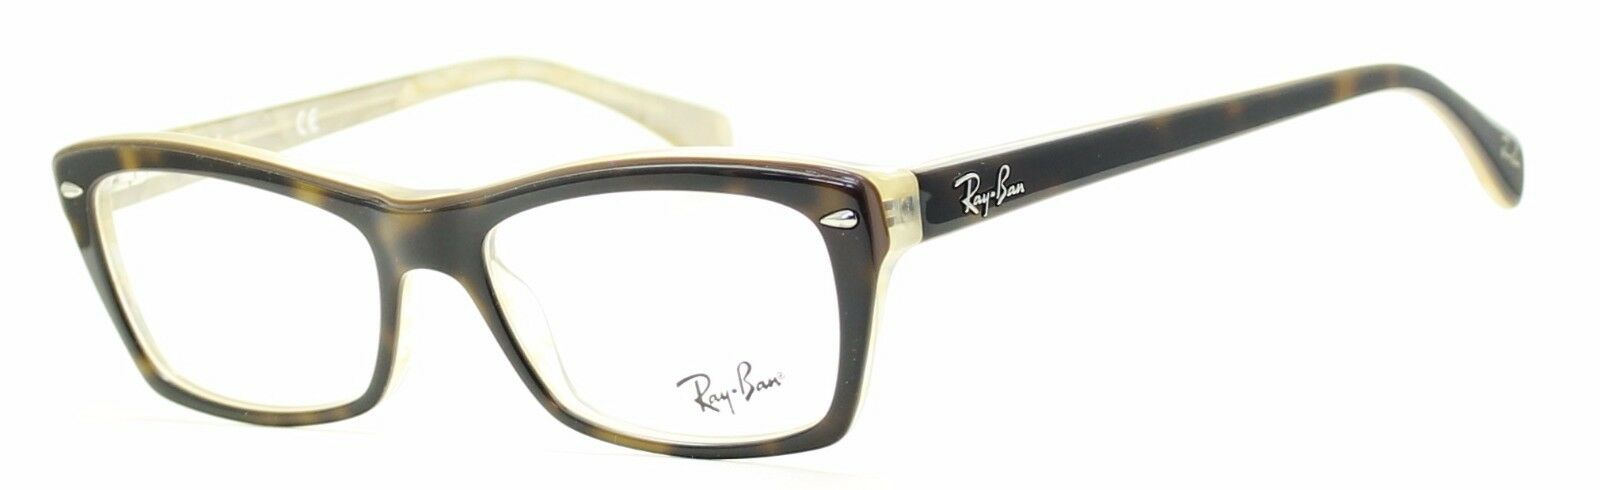 RAY BAN RB 5255 5075 RX Optical FRAMES RAYBAN Glasses Eyewear Eyeglasses - New